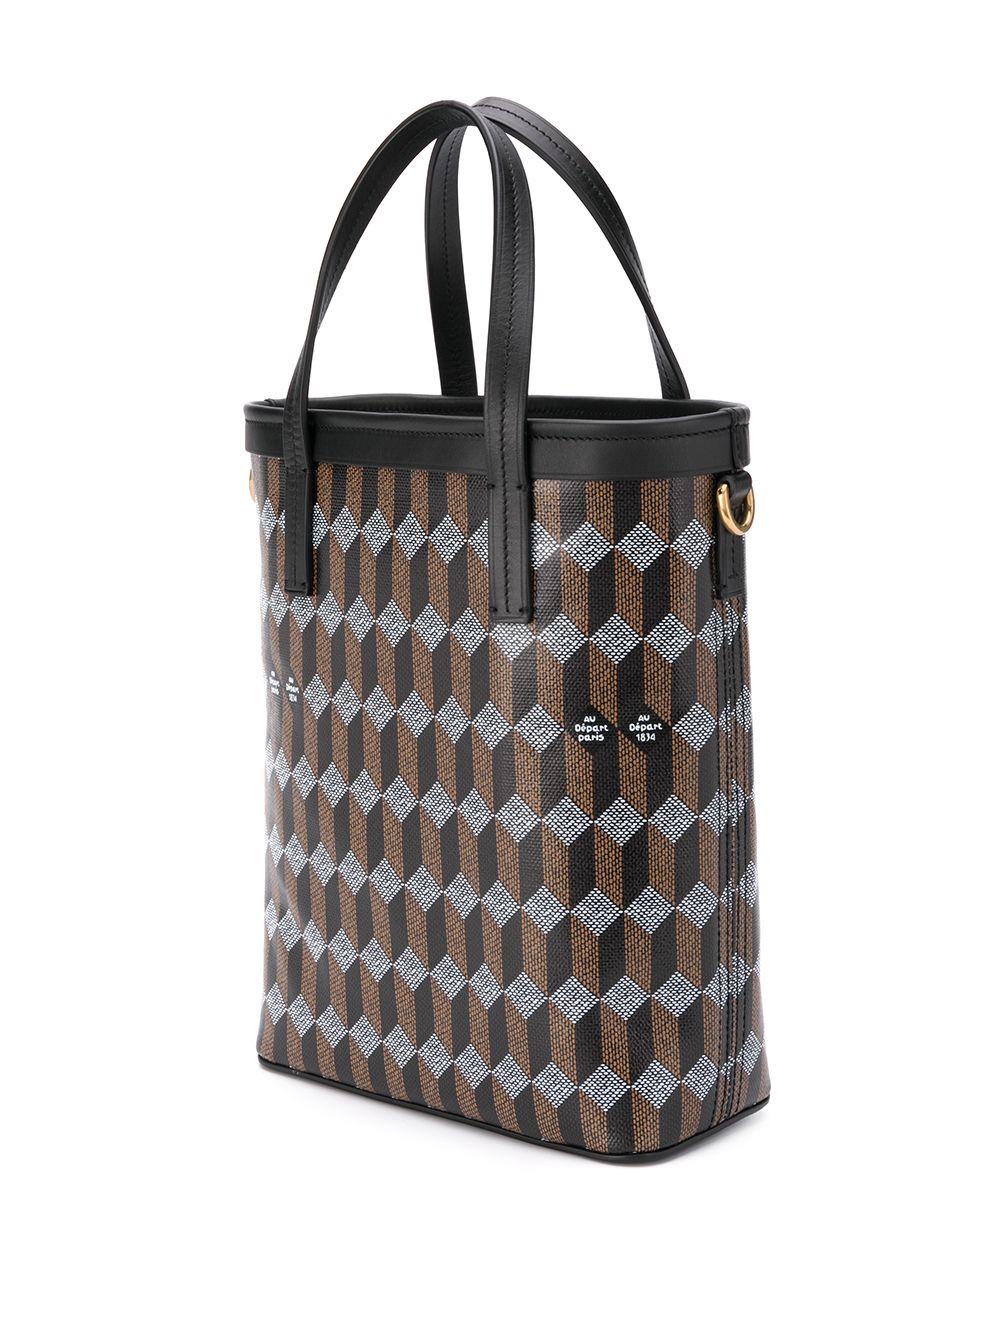 Vertical geometric pattern tote bag black